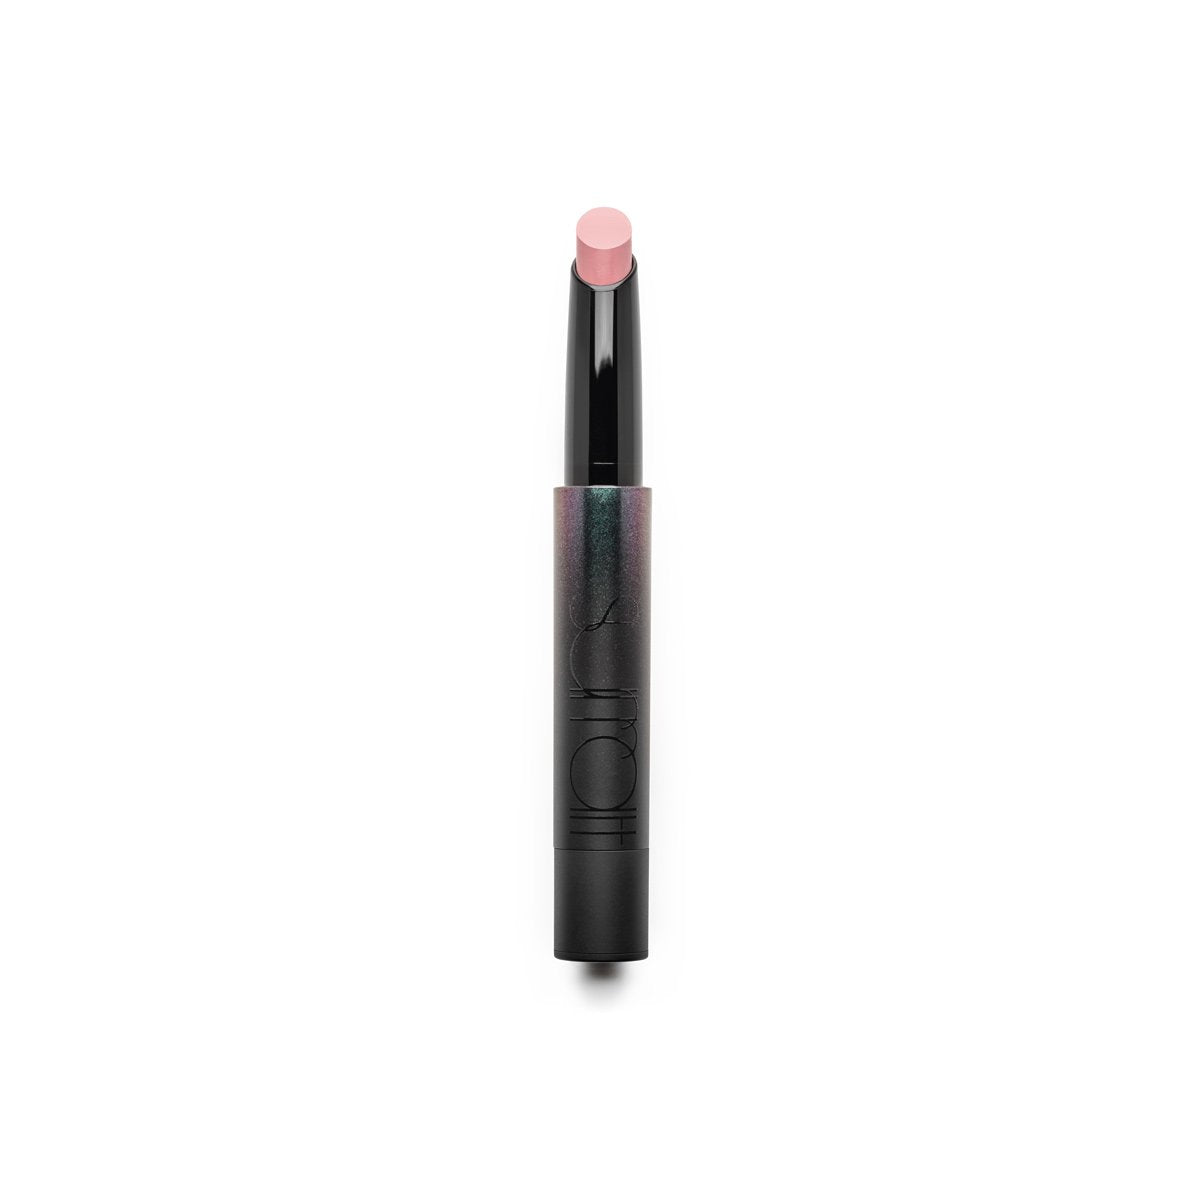 CHUCHOTER - PINKY BEIGE - creamy moisturizing lipstick lip balm in pinky beige shade